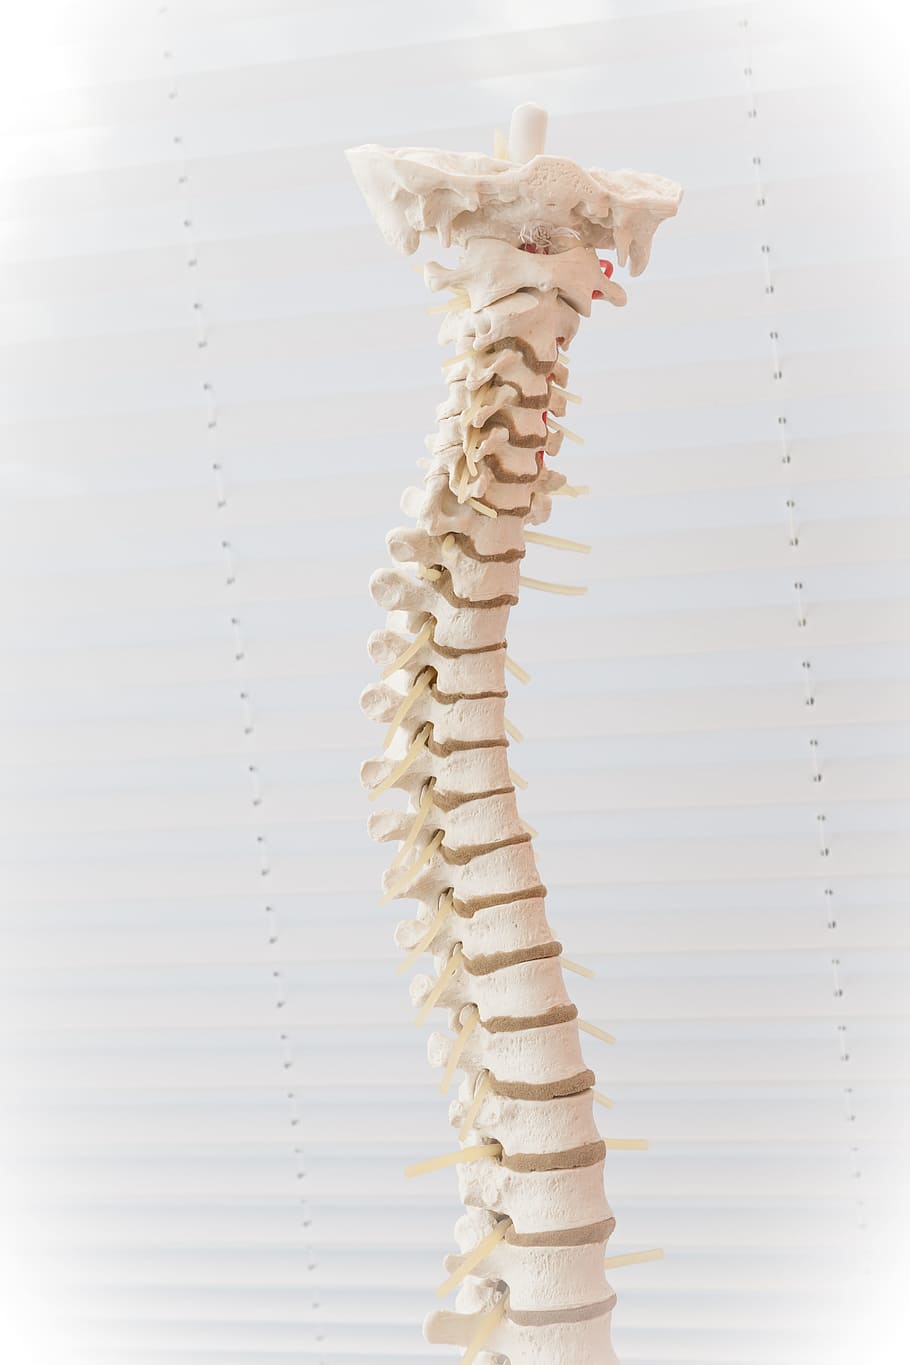 manusia, dekorasi tulang belakang, tulang belakang, cakram, gerakan, herniasi lumbar, penyakit, medis, tulang, sembuh